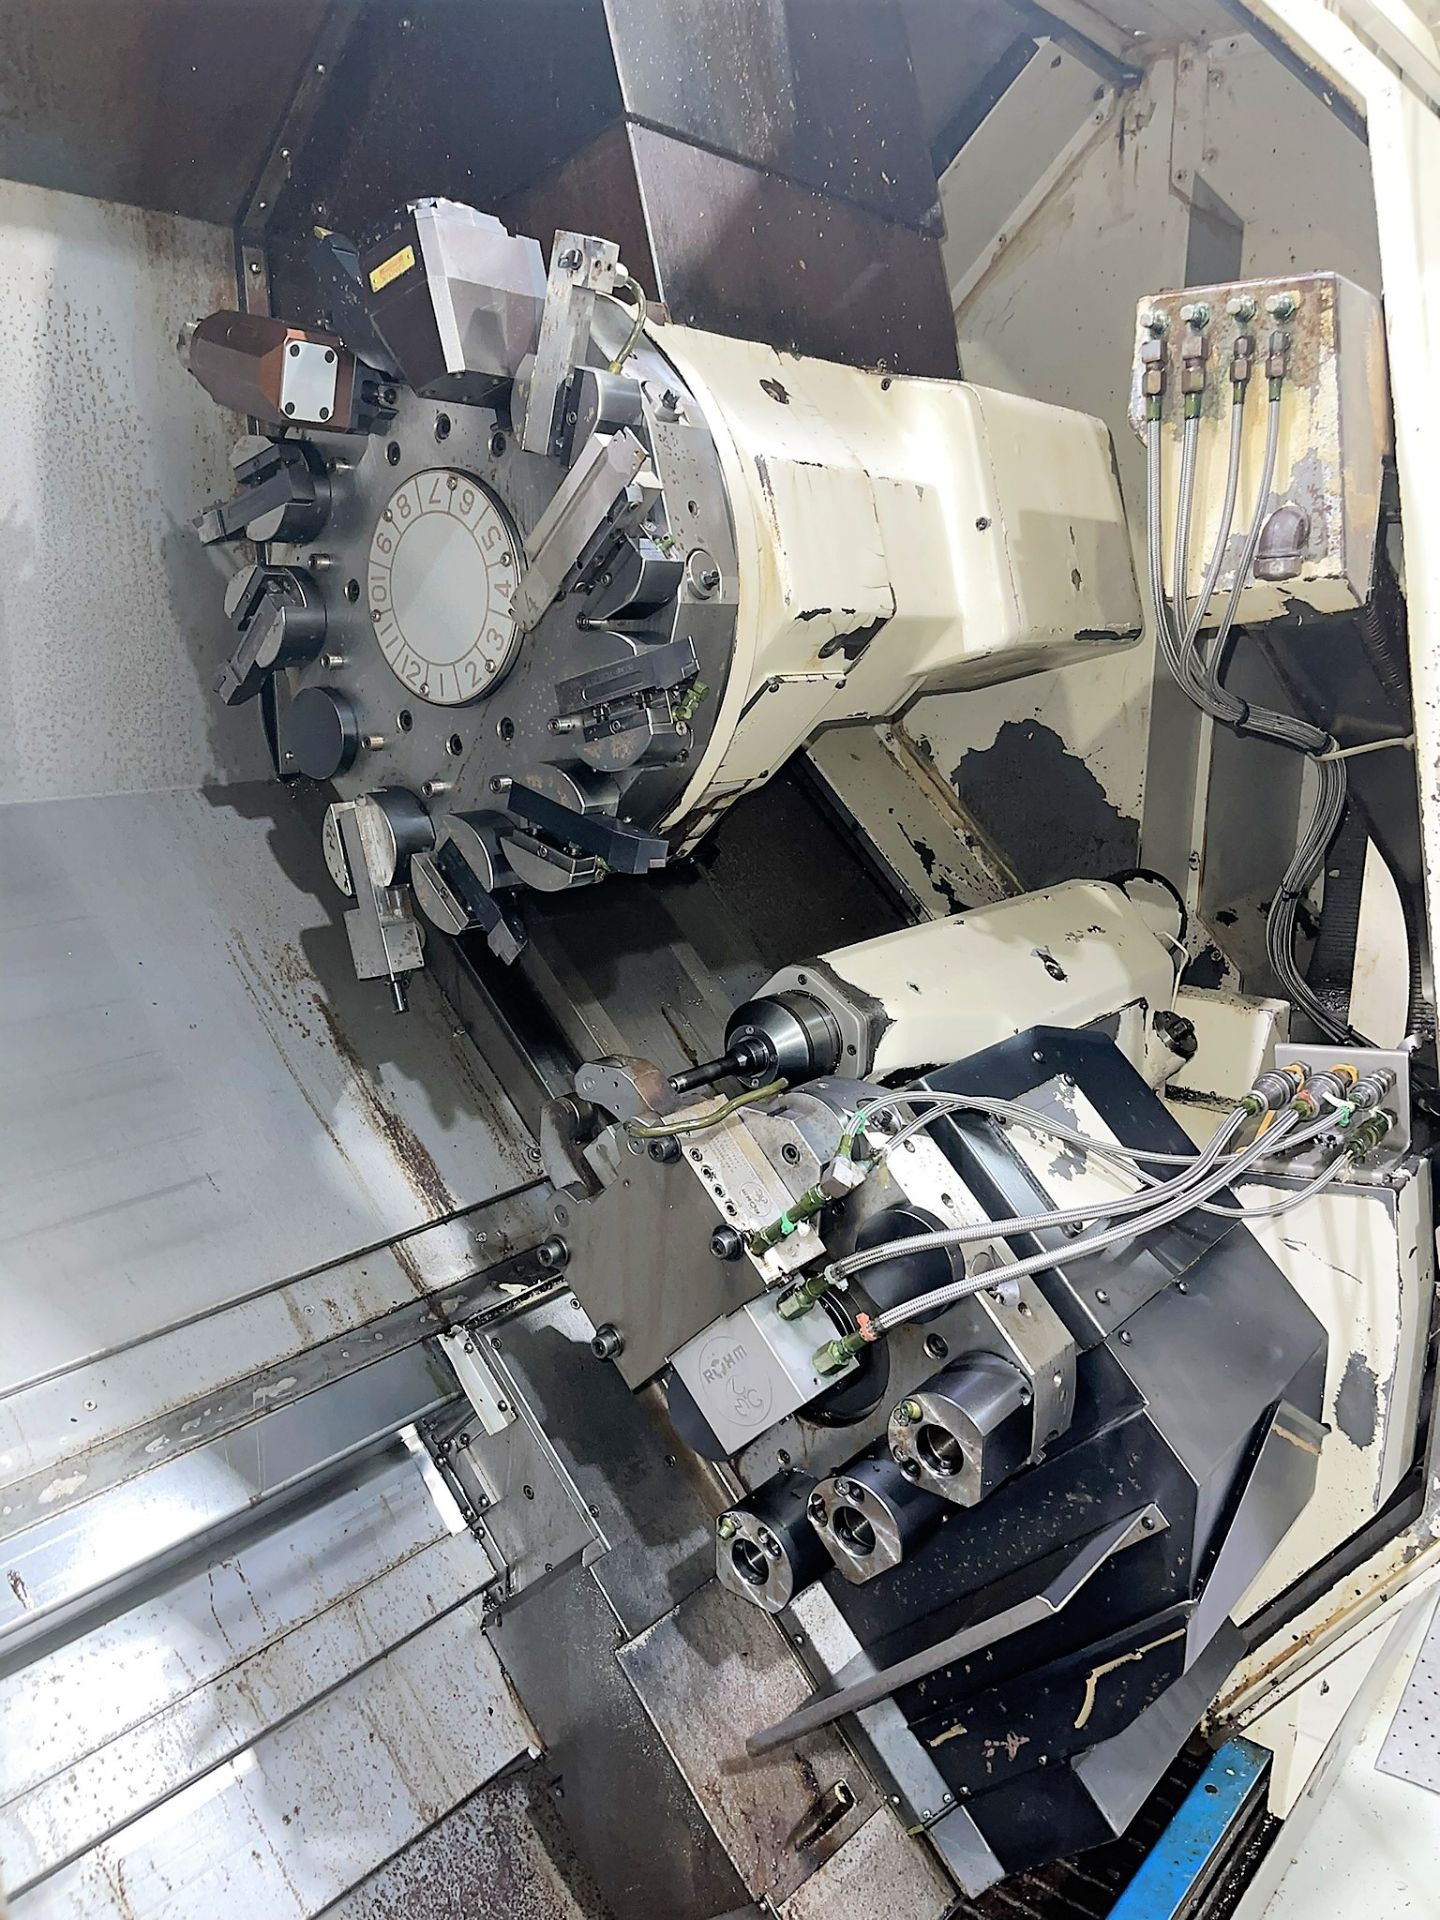 OKUMA Impact LU-15MY Twin-Turret CNC Turning Center with Live Milling, S/N 2233 - Image 6 of 13